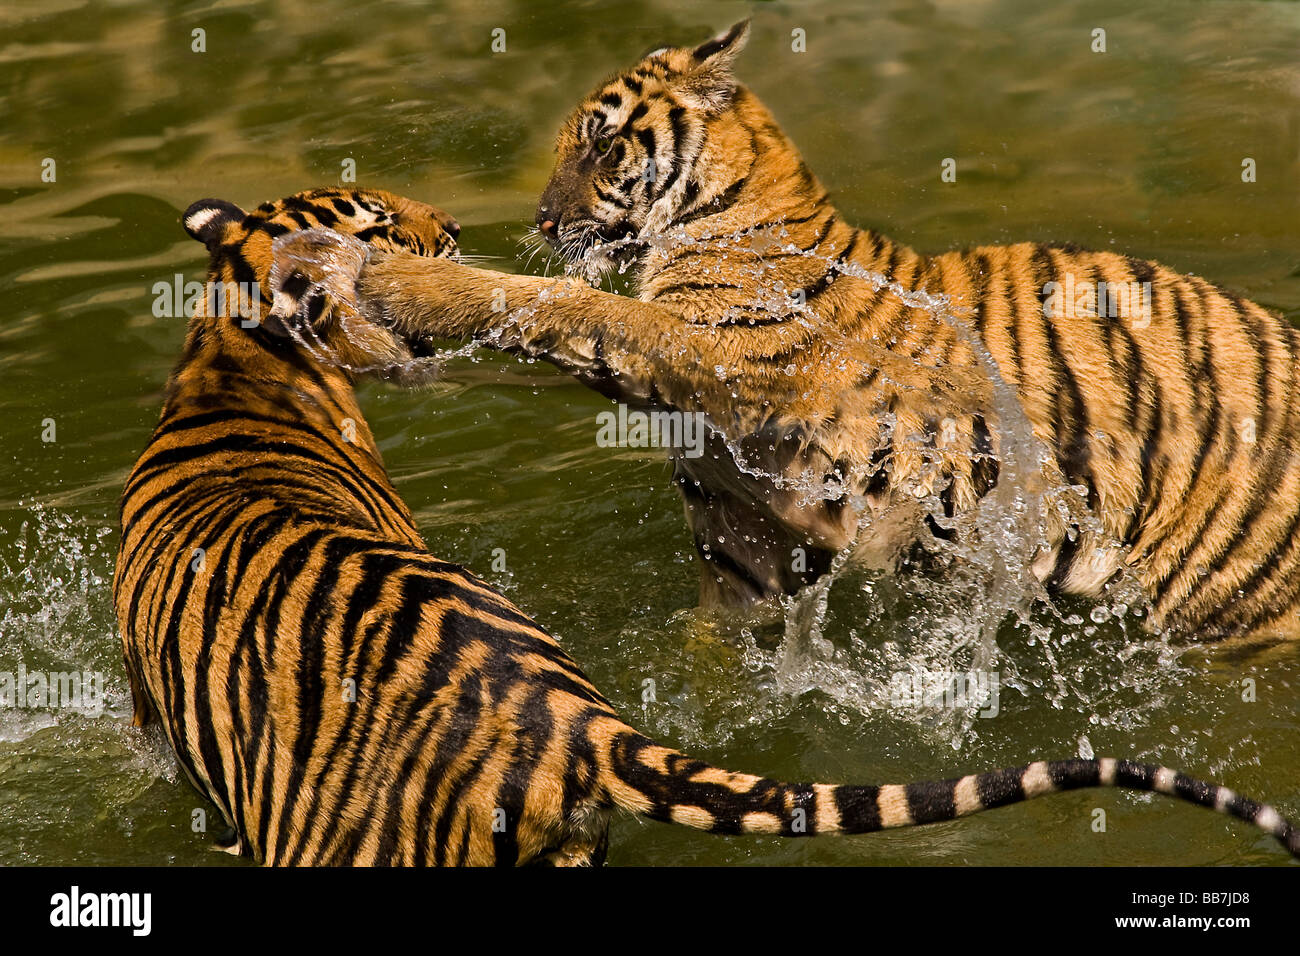 Two tigers (Panthera tigris) fighting in water Stock Photo